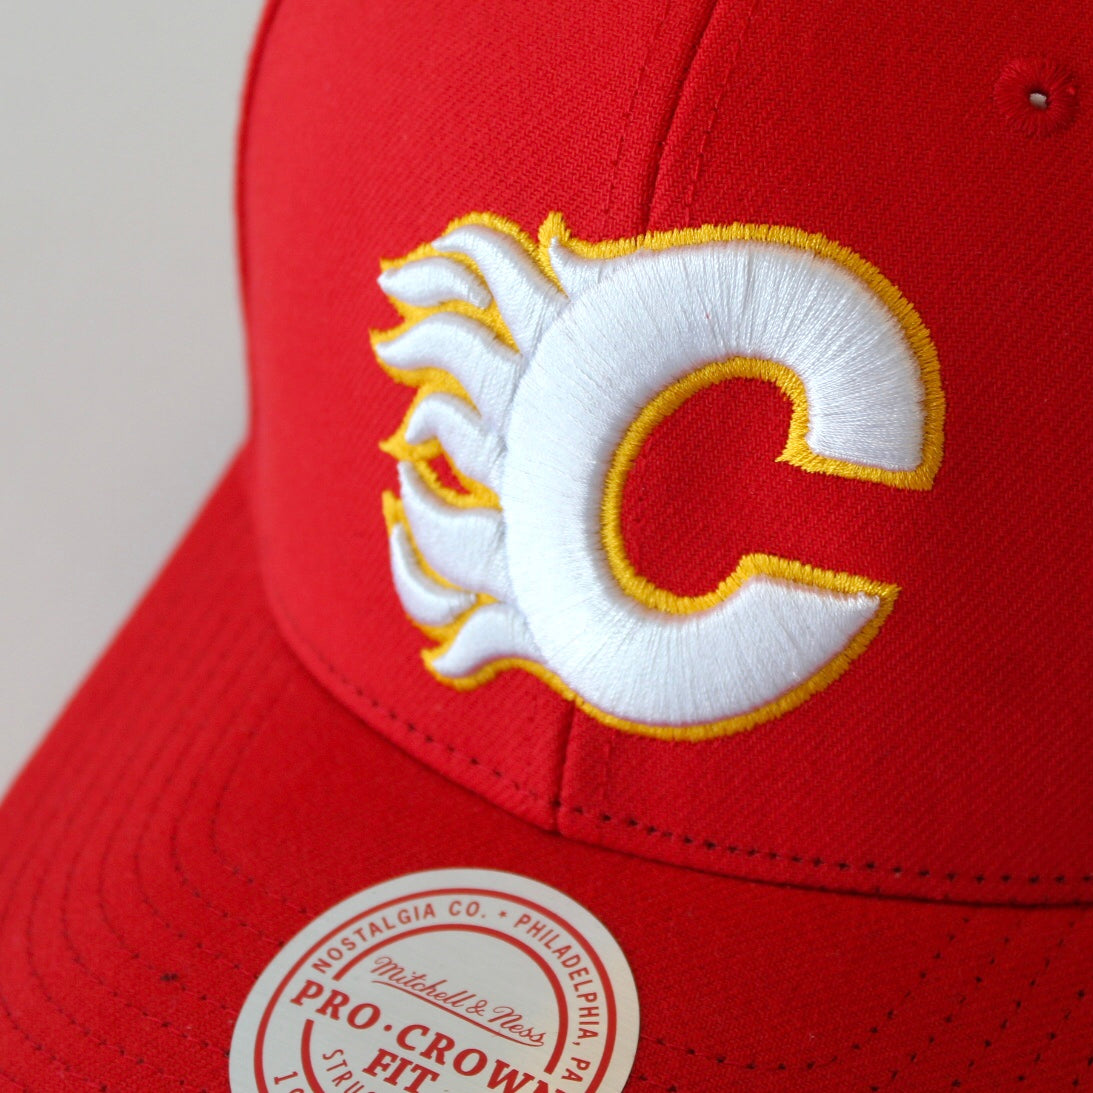 Mitchell and Ness Calgary Flames Team Ground 2.0 Pro Snapback nhl hockey hat